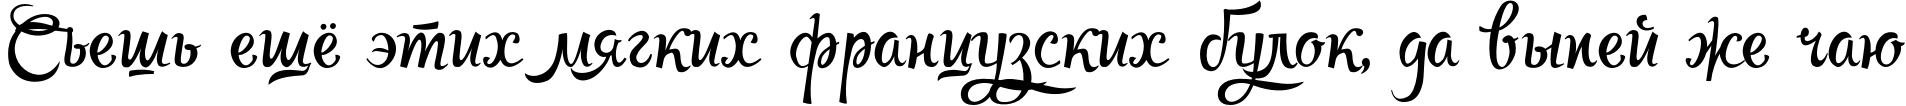 Пример написания шрифтом Rupster Script Free текста на русском